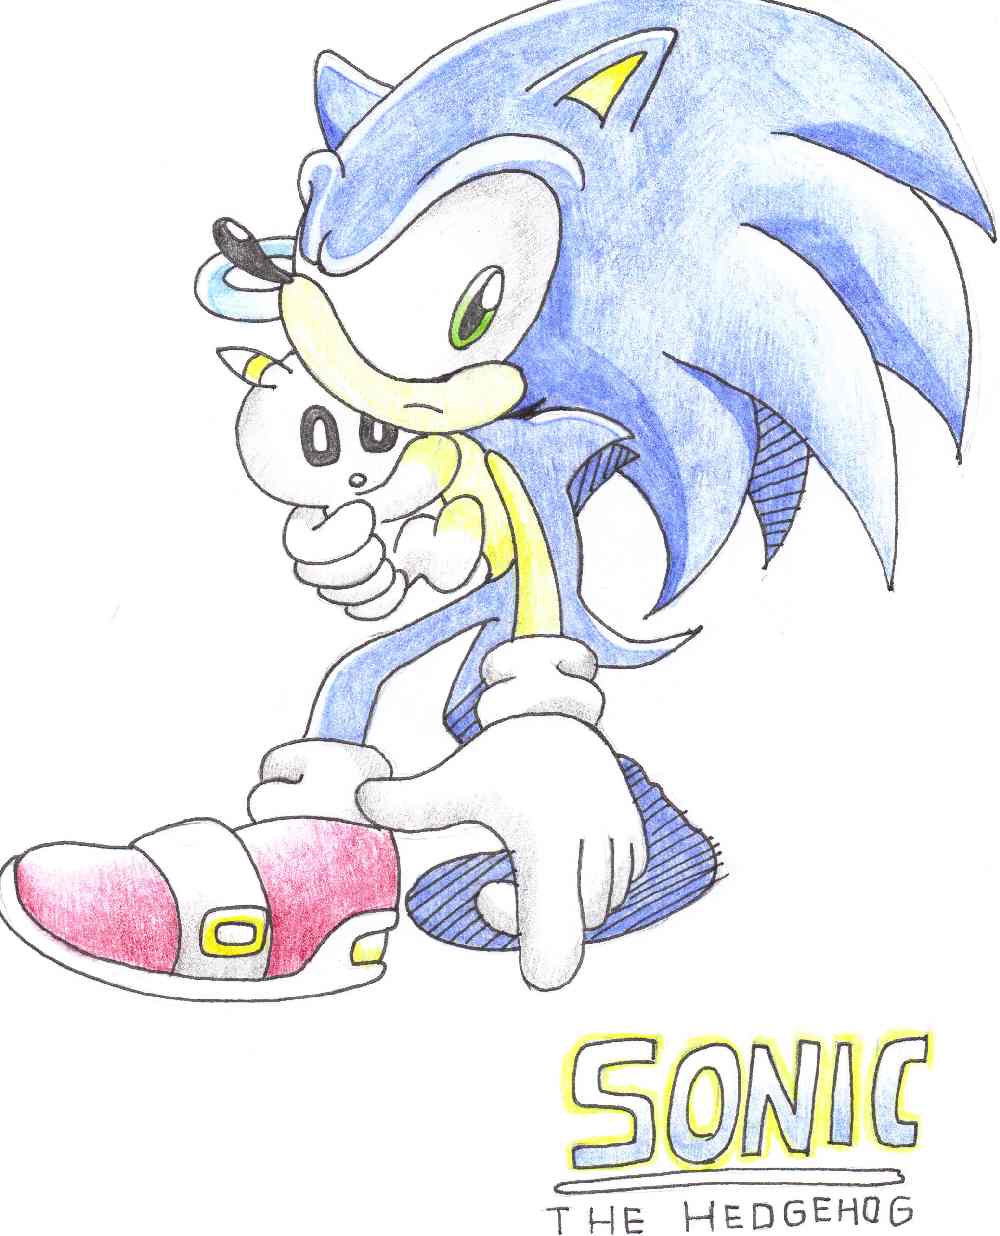 Sonic the Hedgehog by ShadowLink_350